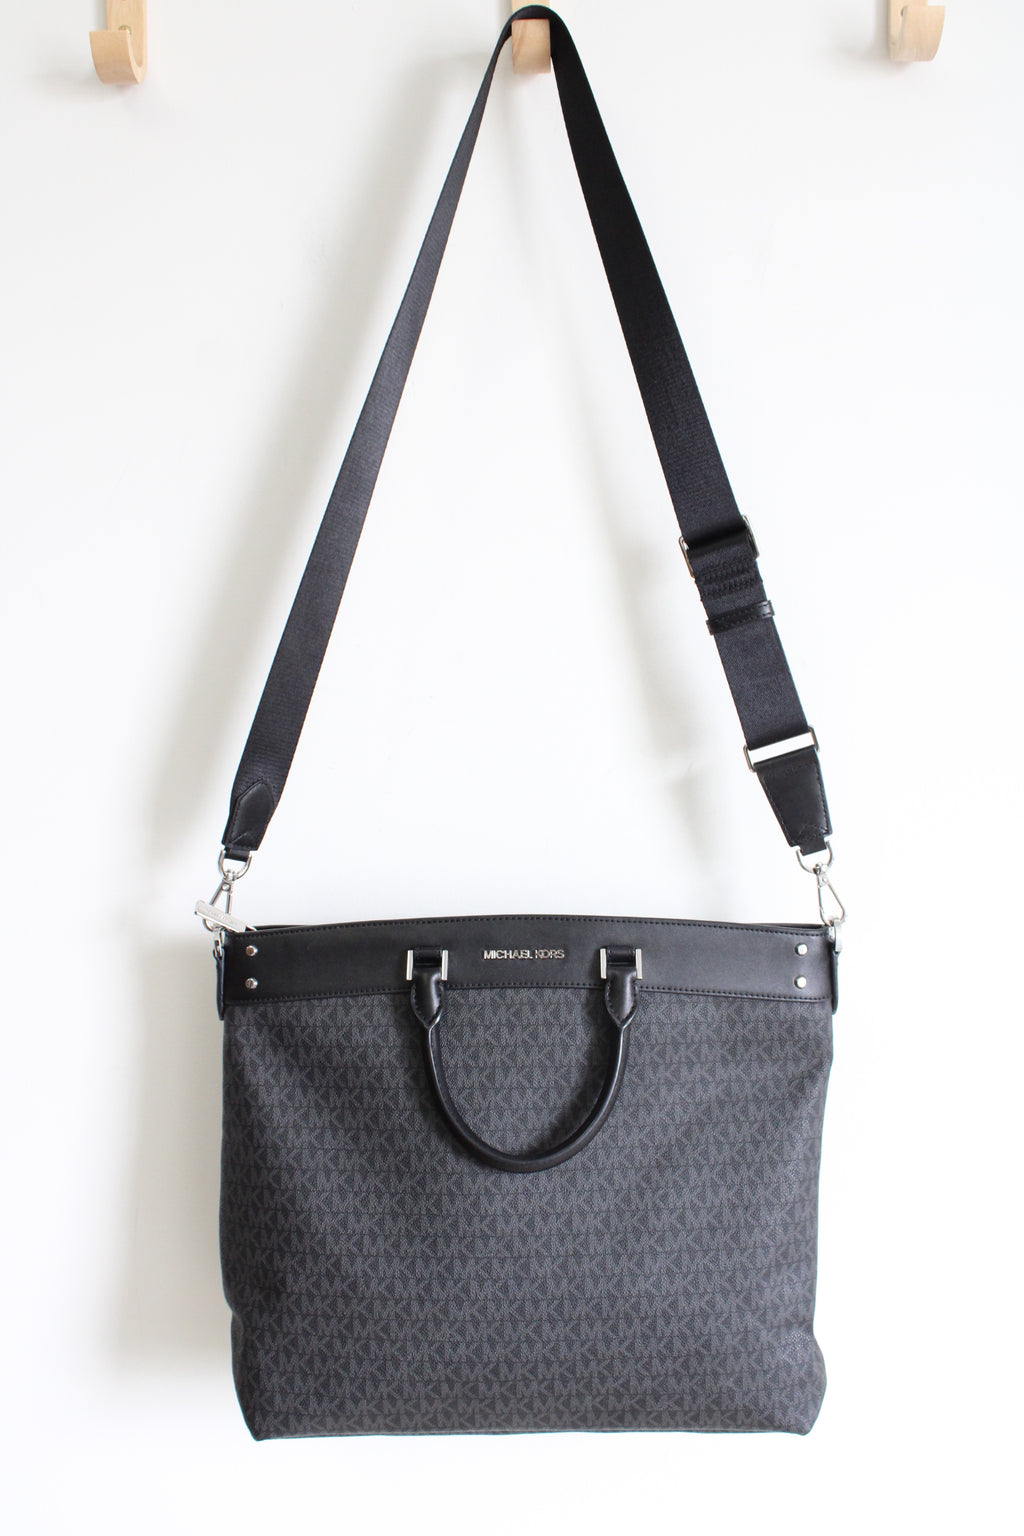 Michael Kors Black Gray Monogram Briefcase Style Bag